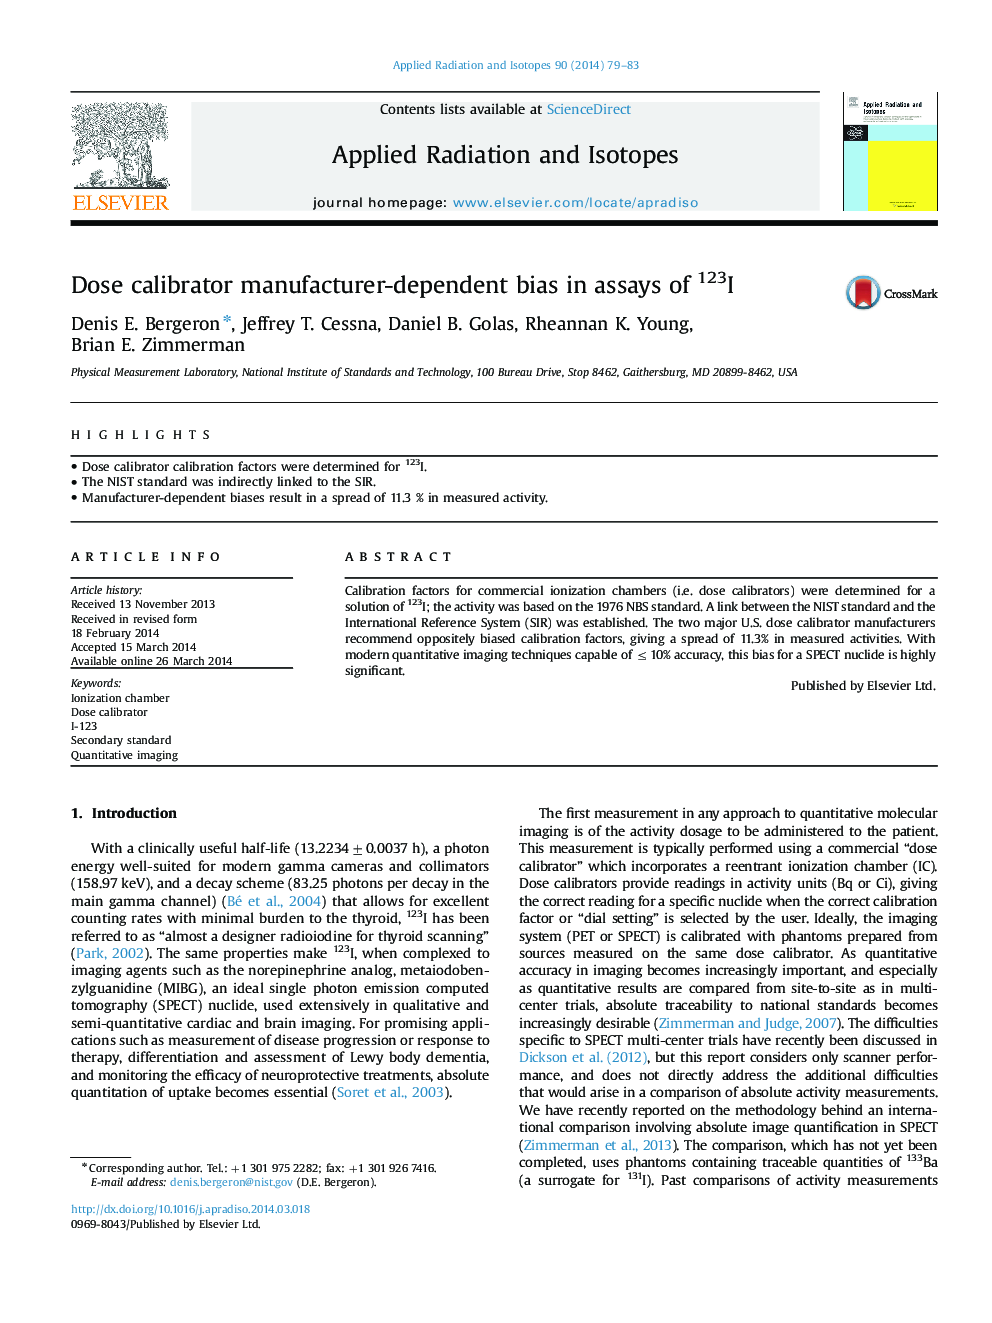 Dose calibrator manufacturer-dependent bias in assays of 123I